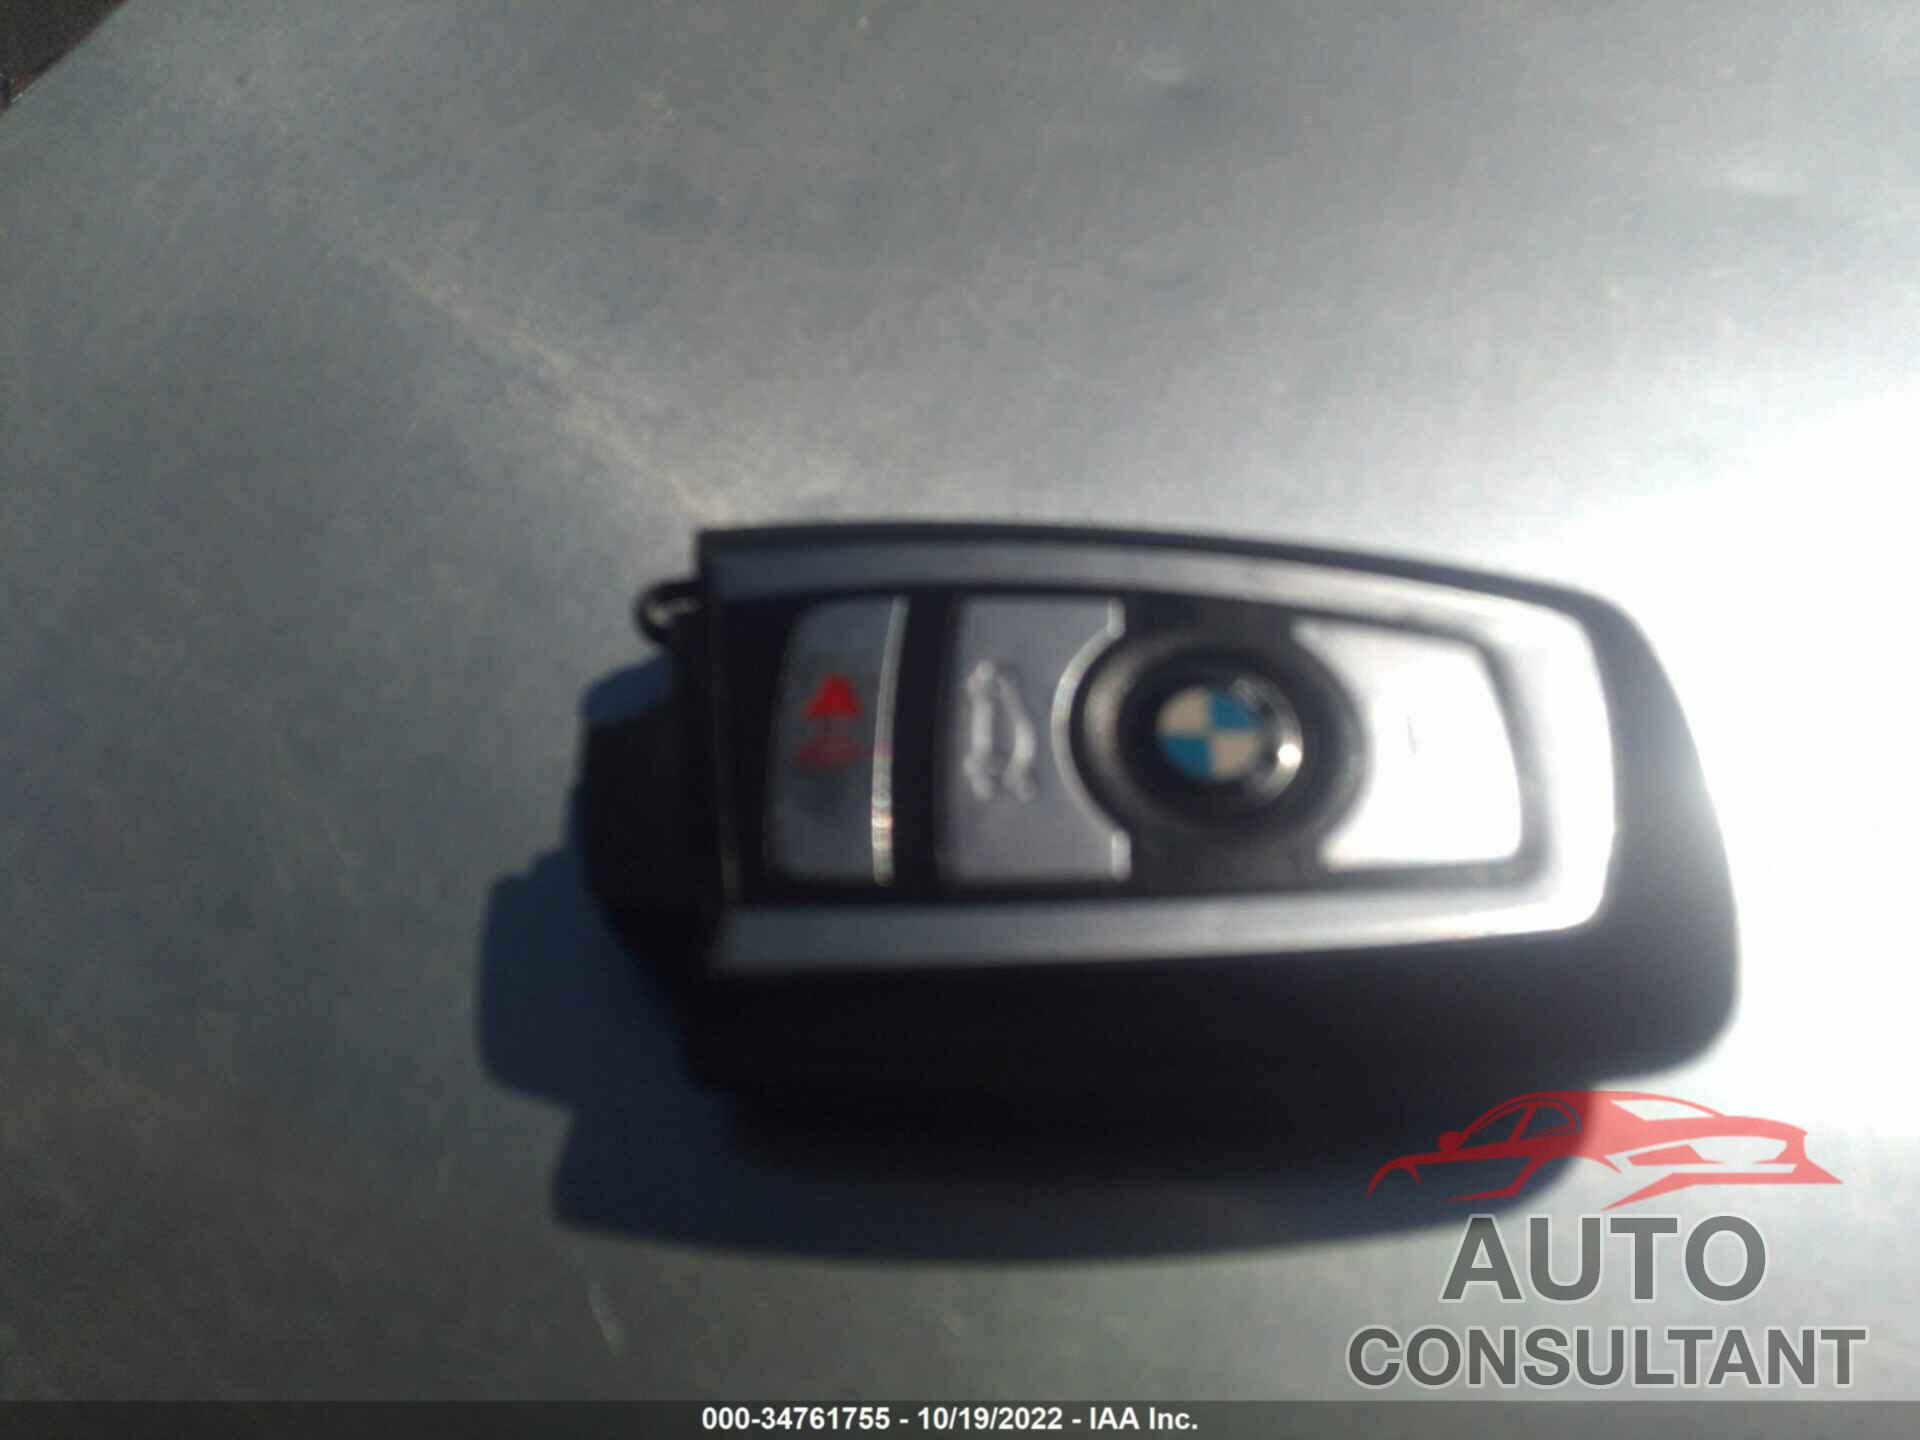 BMW M4 2020 - WBS3S7C04LAH85032